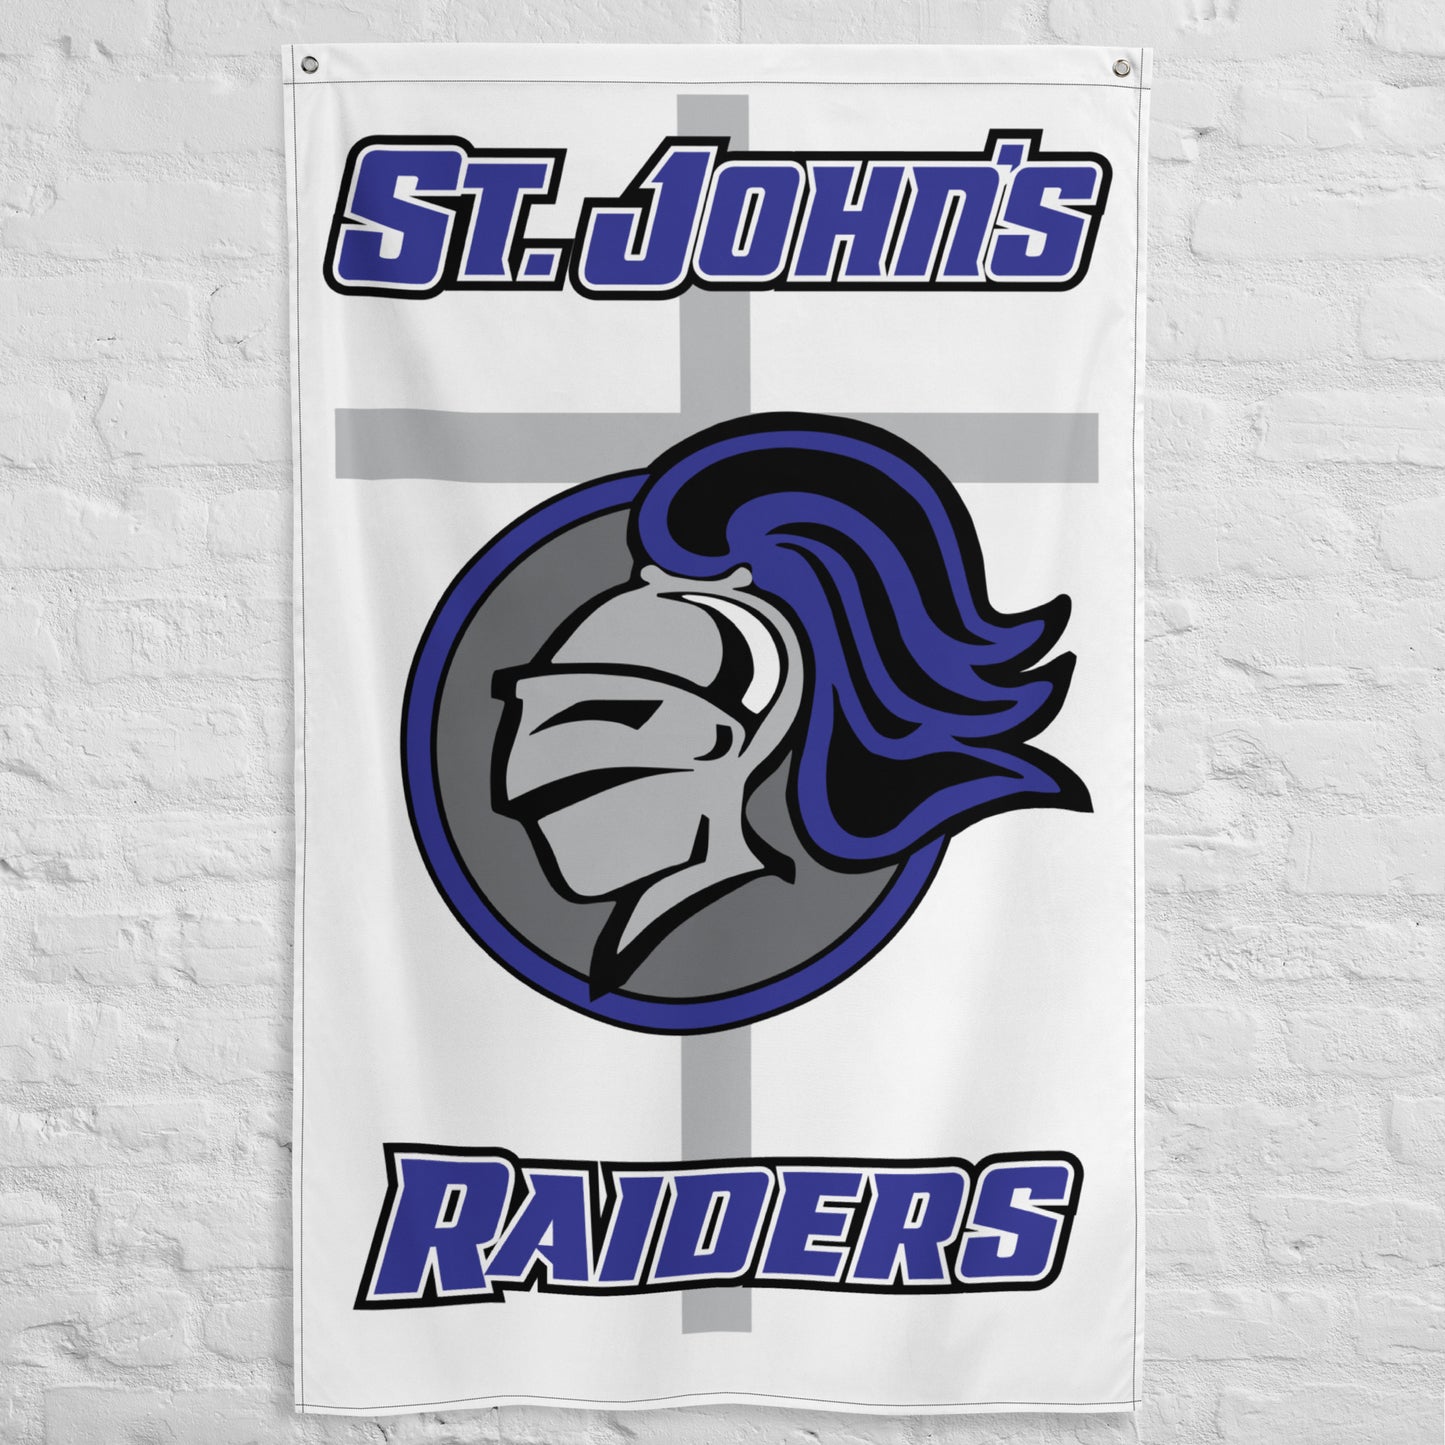 St Johns Raiders 3' x 5' White Wall Flag